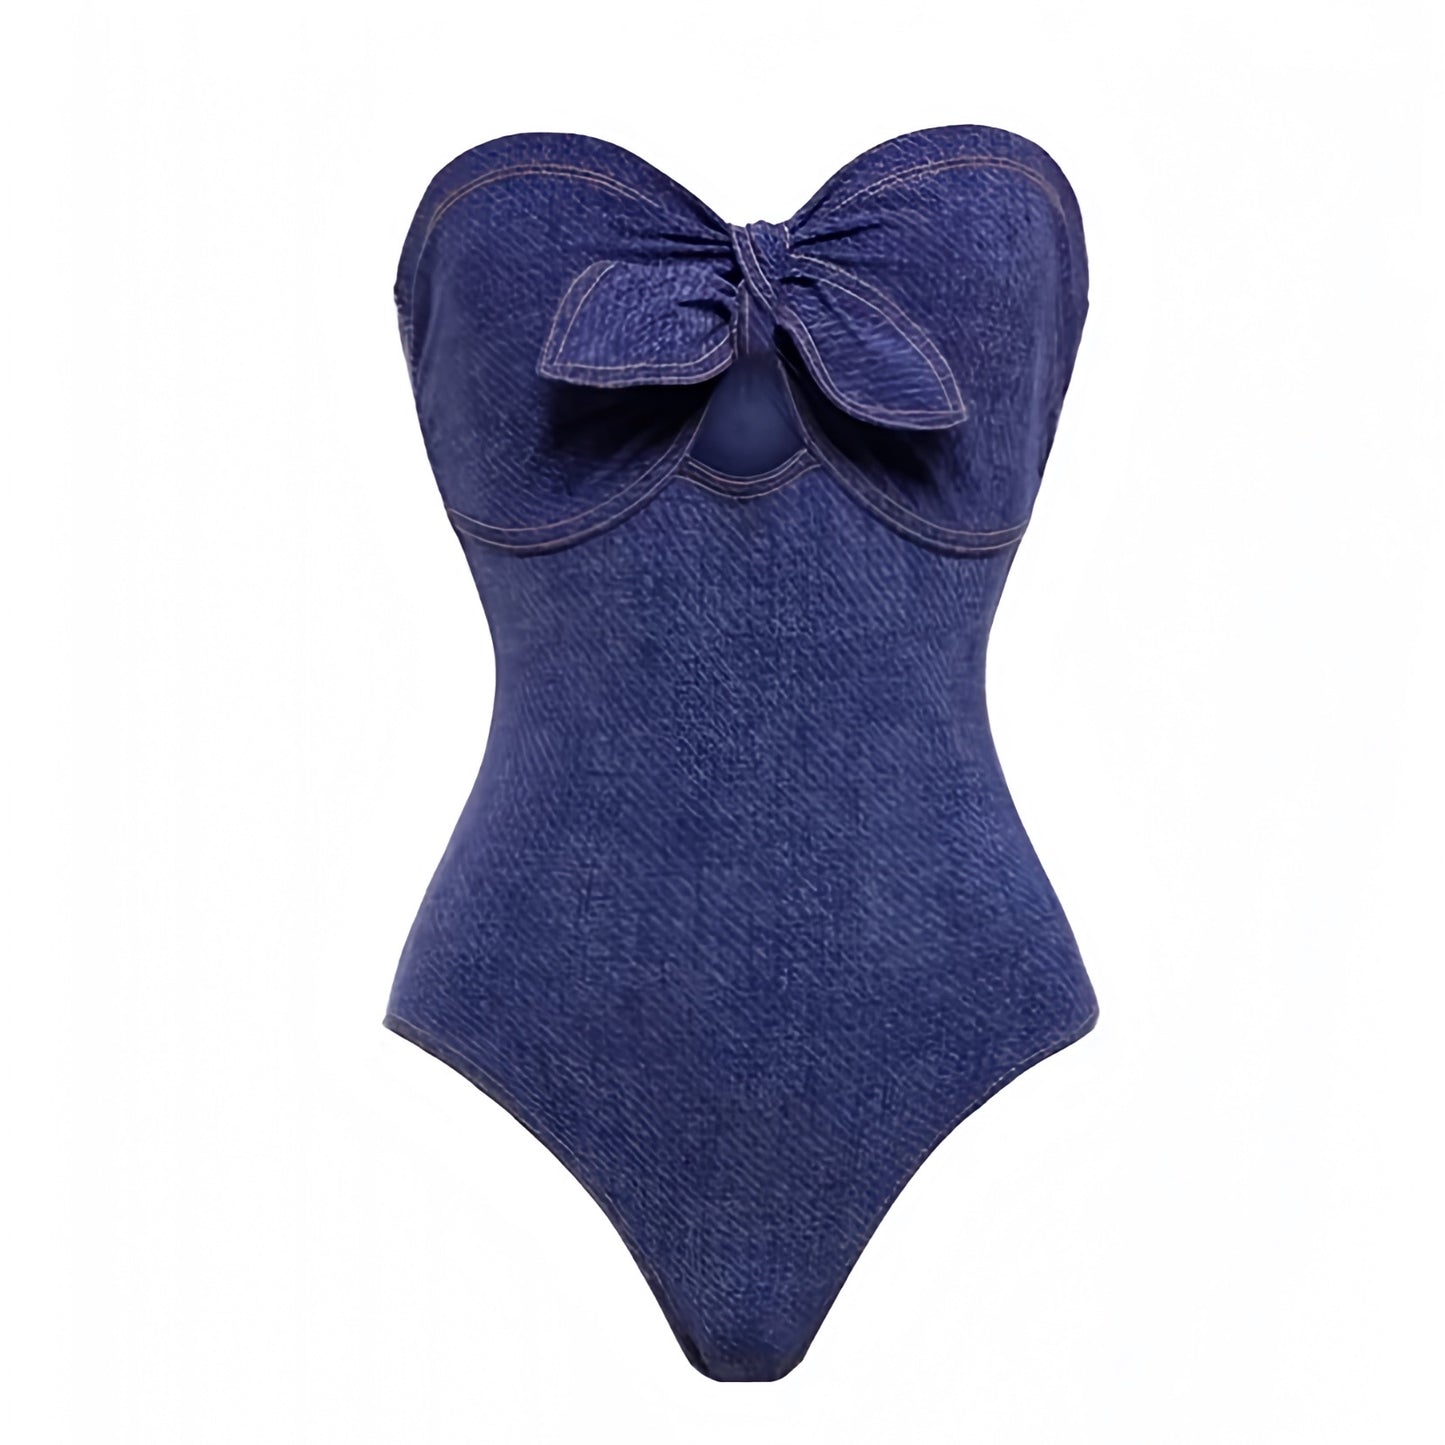 navy-blue-knit-textured-slim-fit-bodycon-cut-out-knot-tie-sweetheart-neckline-bandeau-strapless-sleeveless-underwire-push-up-cheeky-thong-modest-one-piece-swimsuit-swimwear-bathing-suit-women-ladies-teens-tweens-chic-trendy-spring-2024-summer-elegant-classic-classy-feminine-preppy-style-european-greece-vacation-coastal-granddaughter-grandmillennial-mamma-mia-beach-wear-revolve-frankies-bikinis-blackbough-grey-bandit-dupe